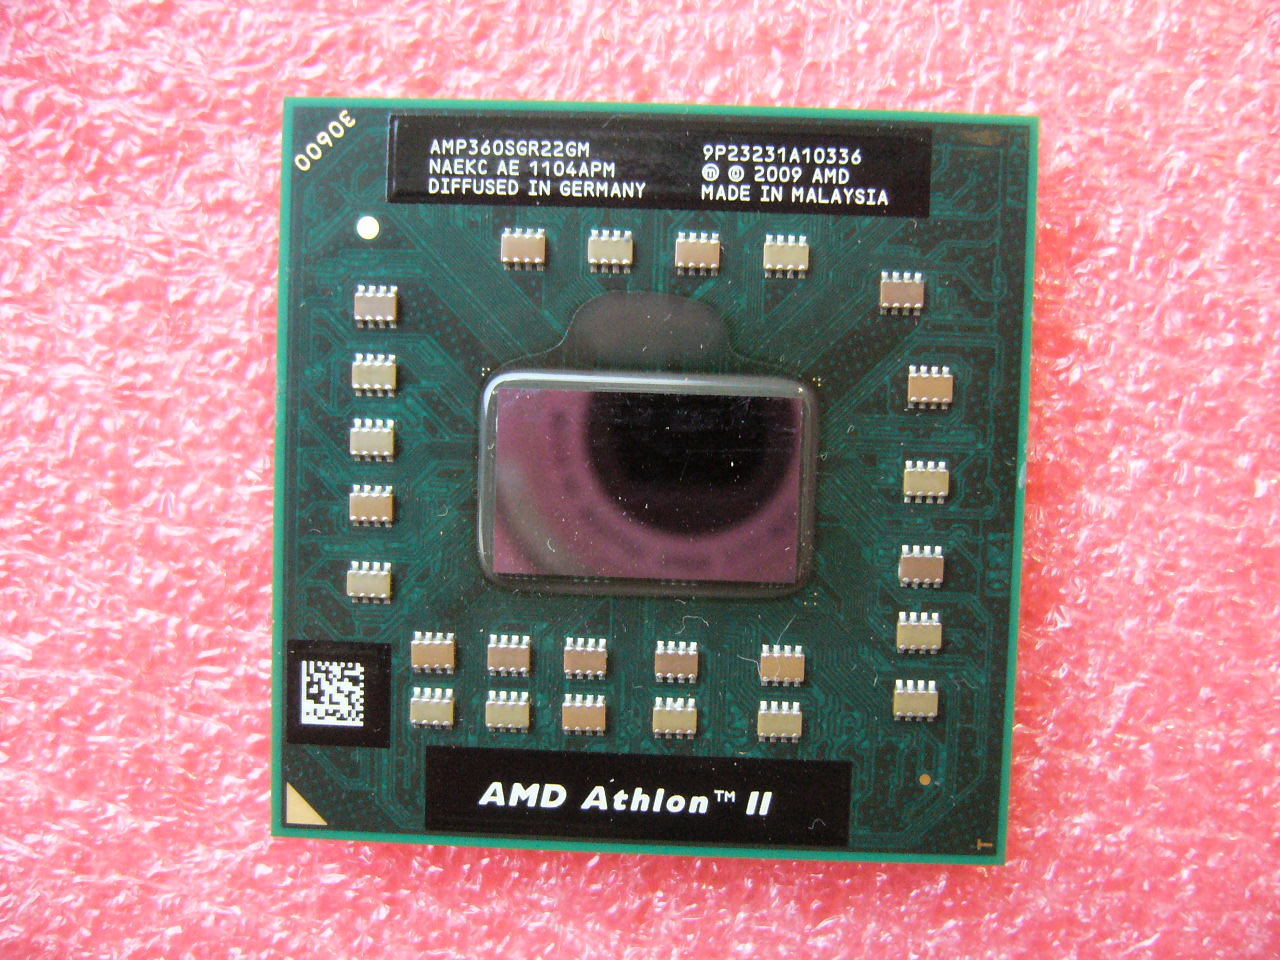 QTY 1x AMD Athlon II P360 2.3GHz Dual-Core (AMP360SGR22GM) Laptop CPU Socket S1